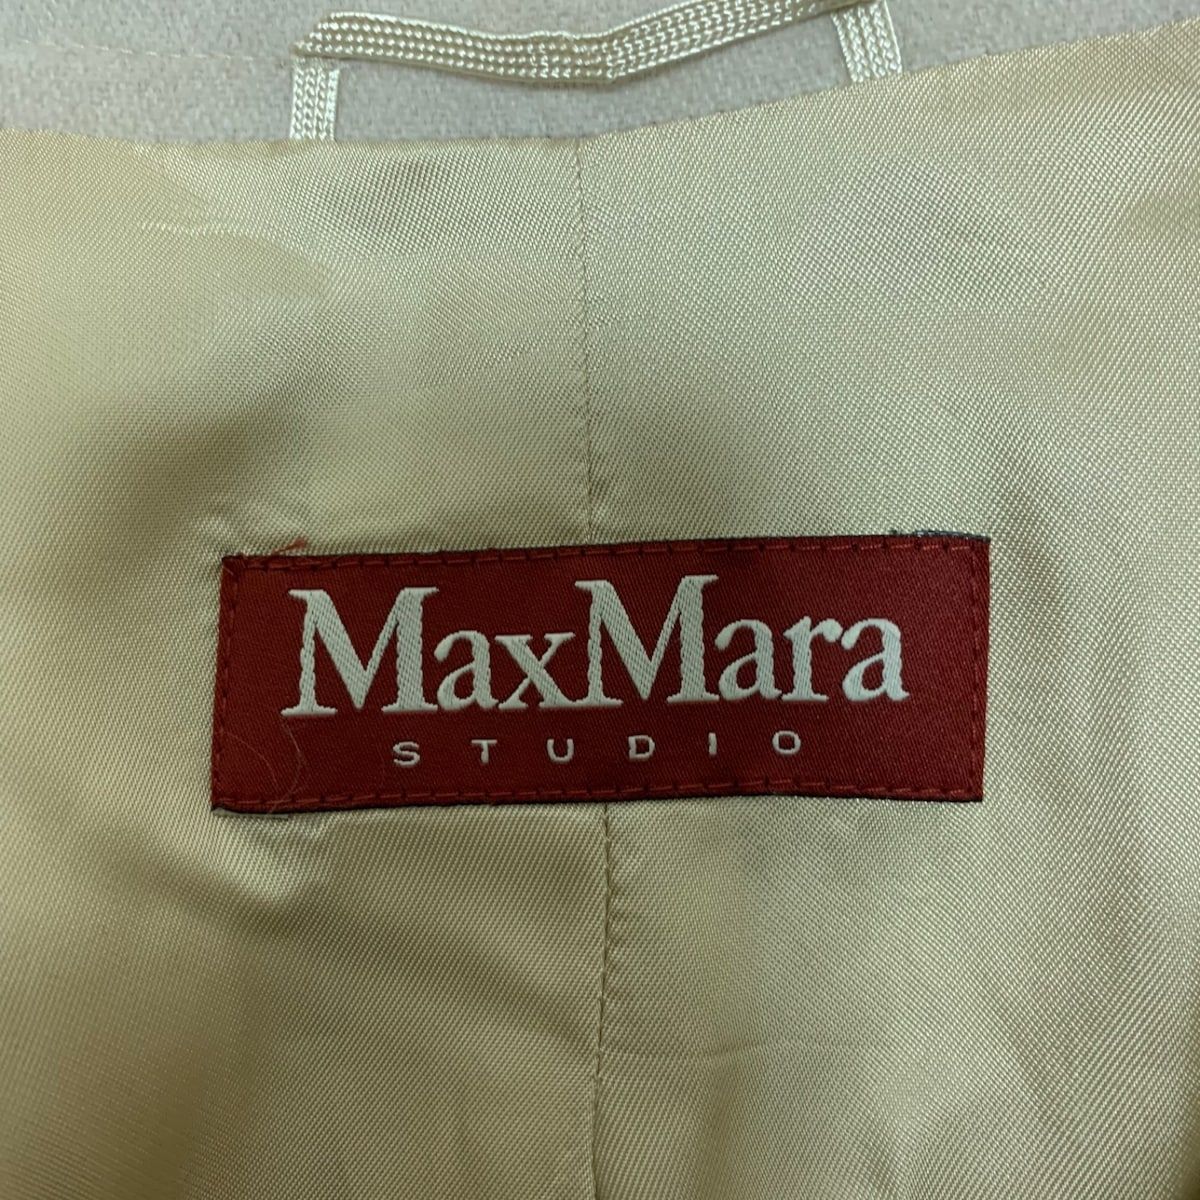 Max Mara STUDIO(マックスマーラスタジオ) ジャケット サイズ44 L レディース美品 - ベージュ 長袖/秋/冬